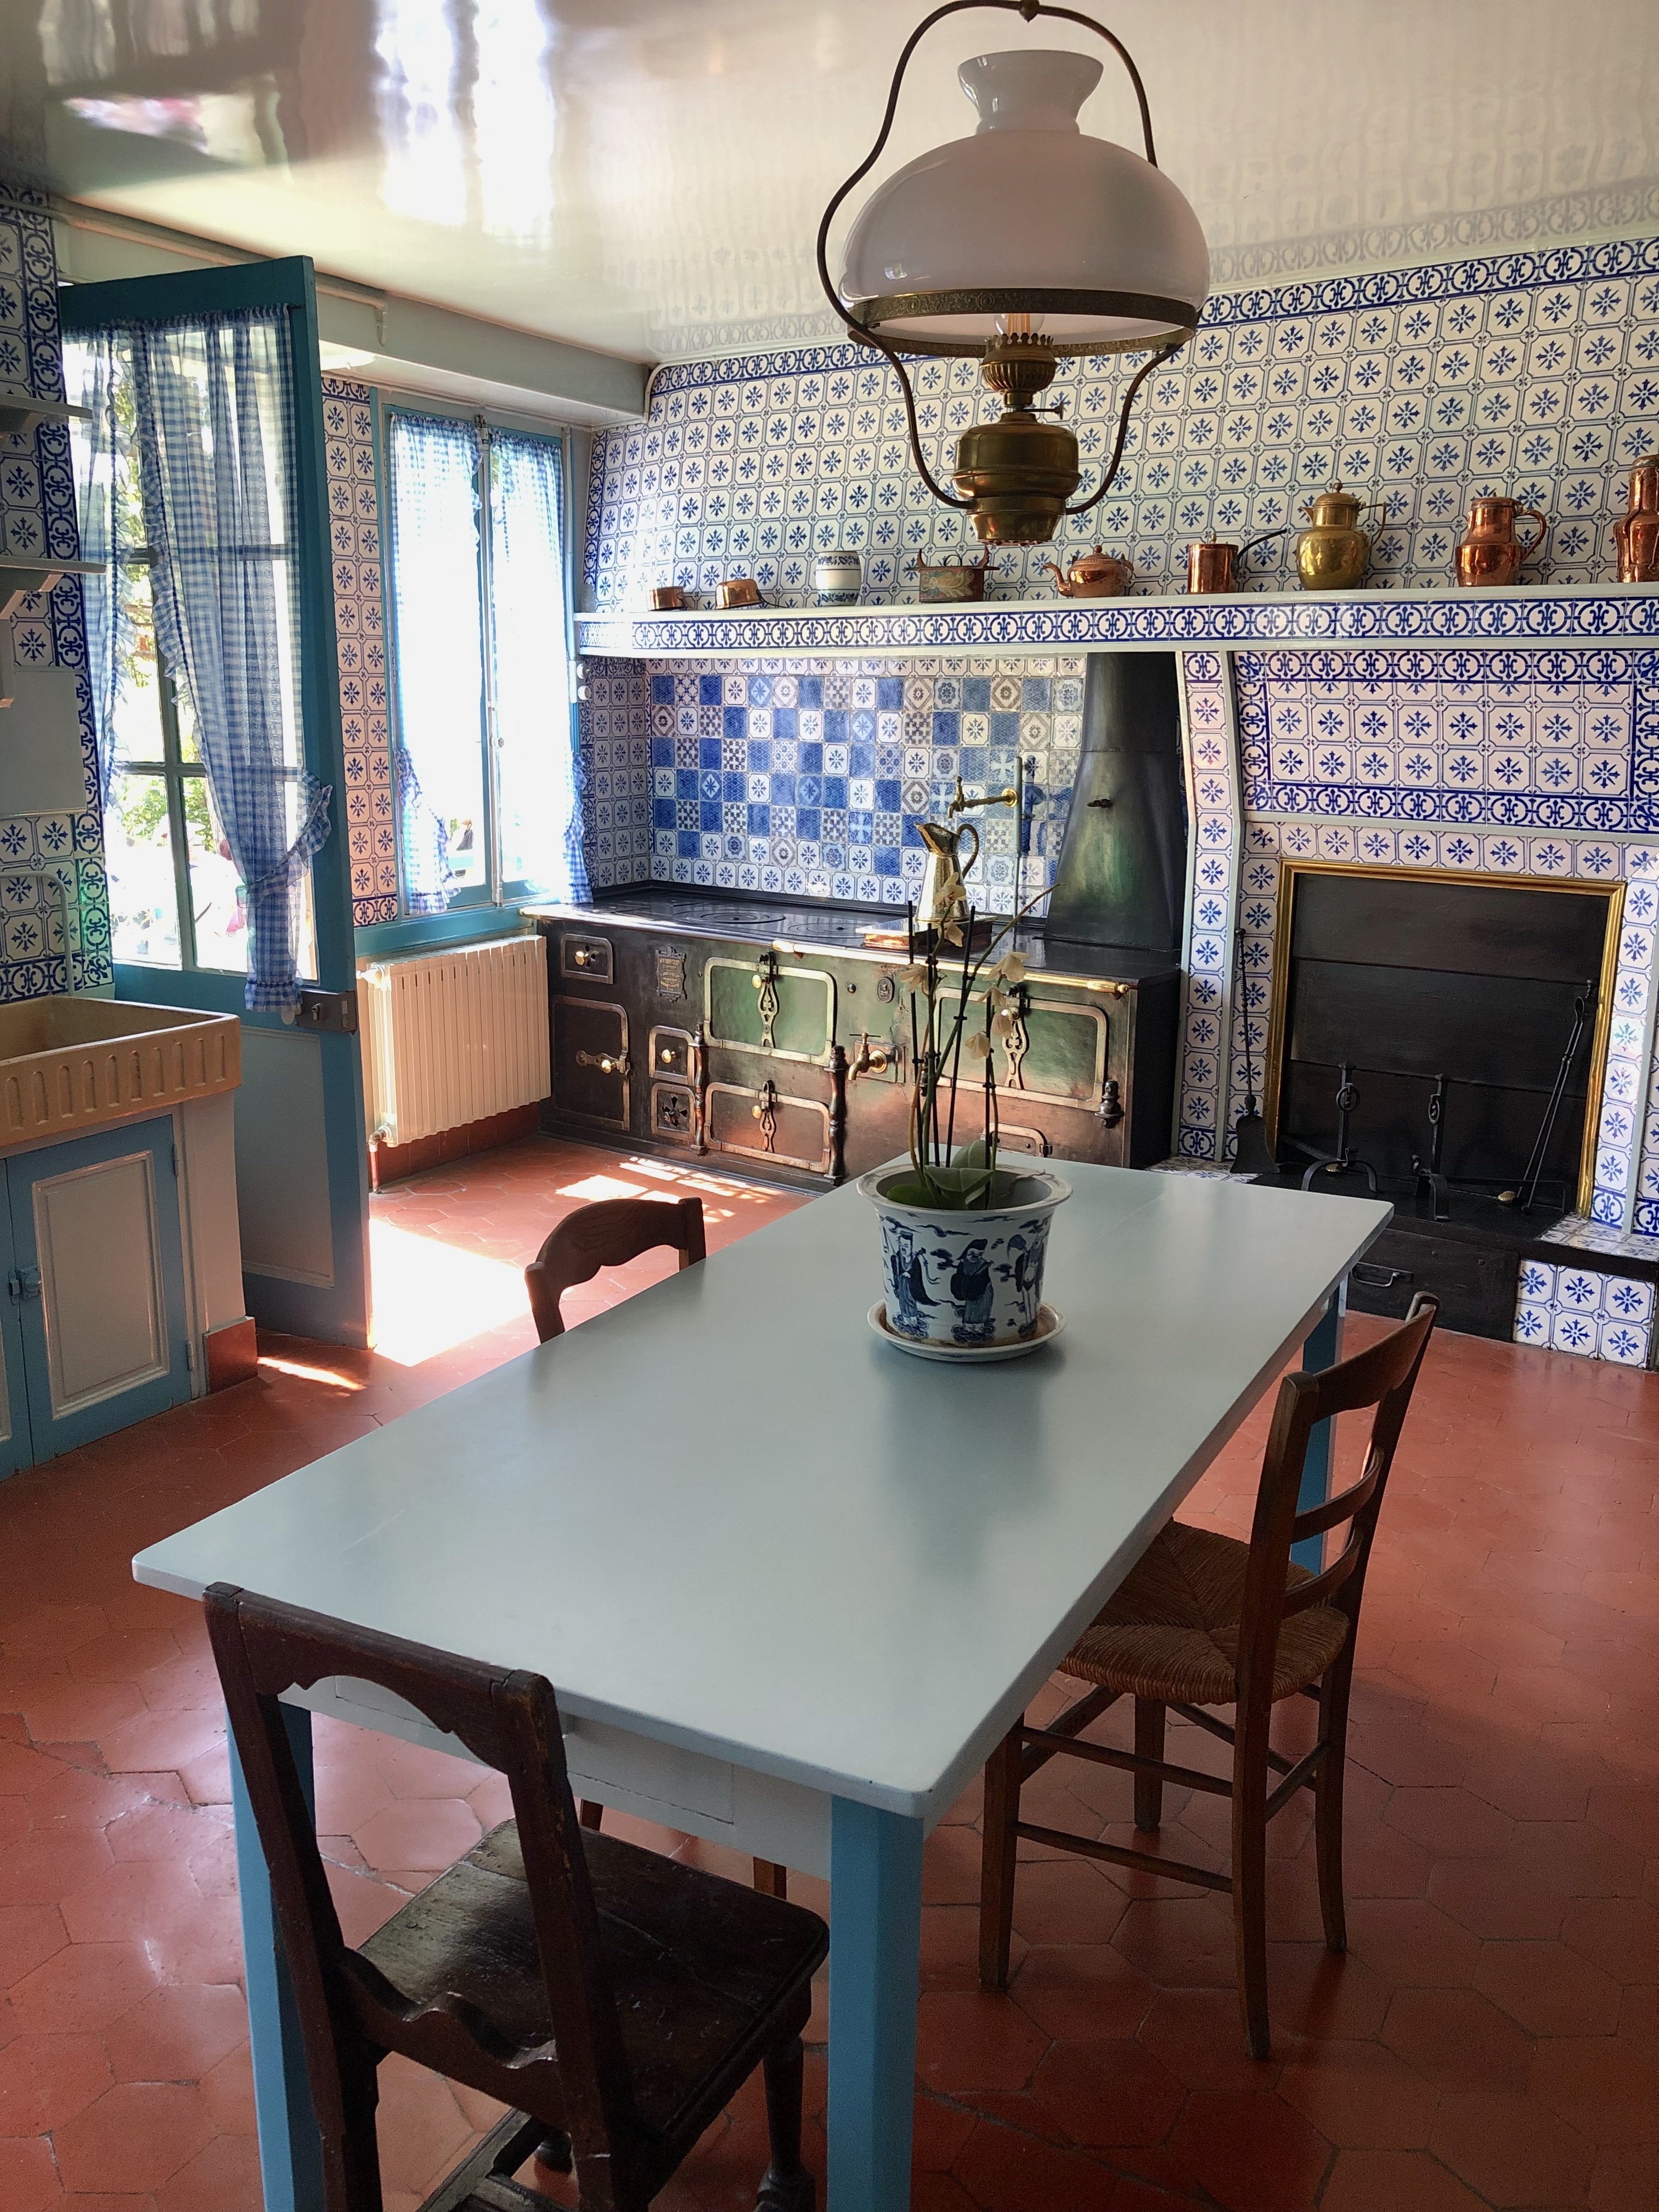 The Blue kitchen Claude Monets house